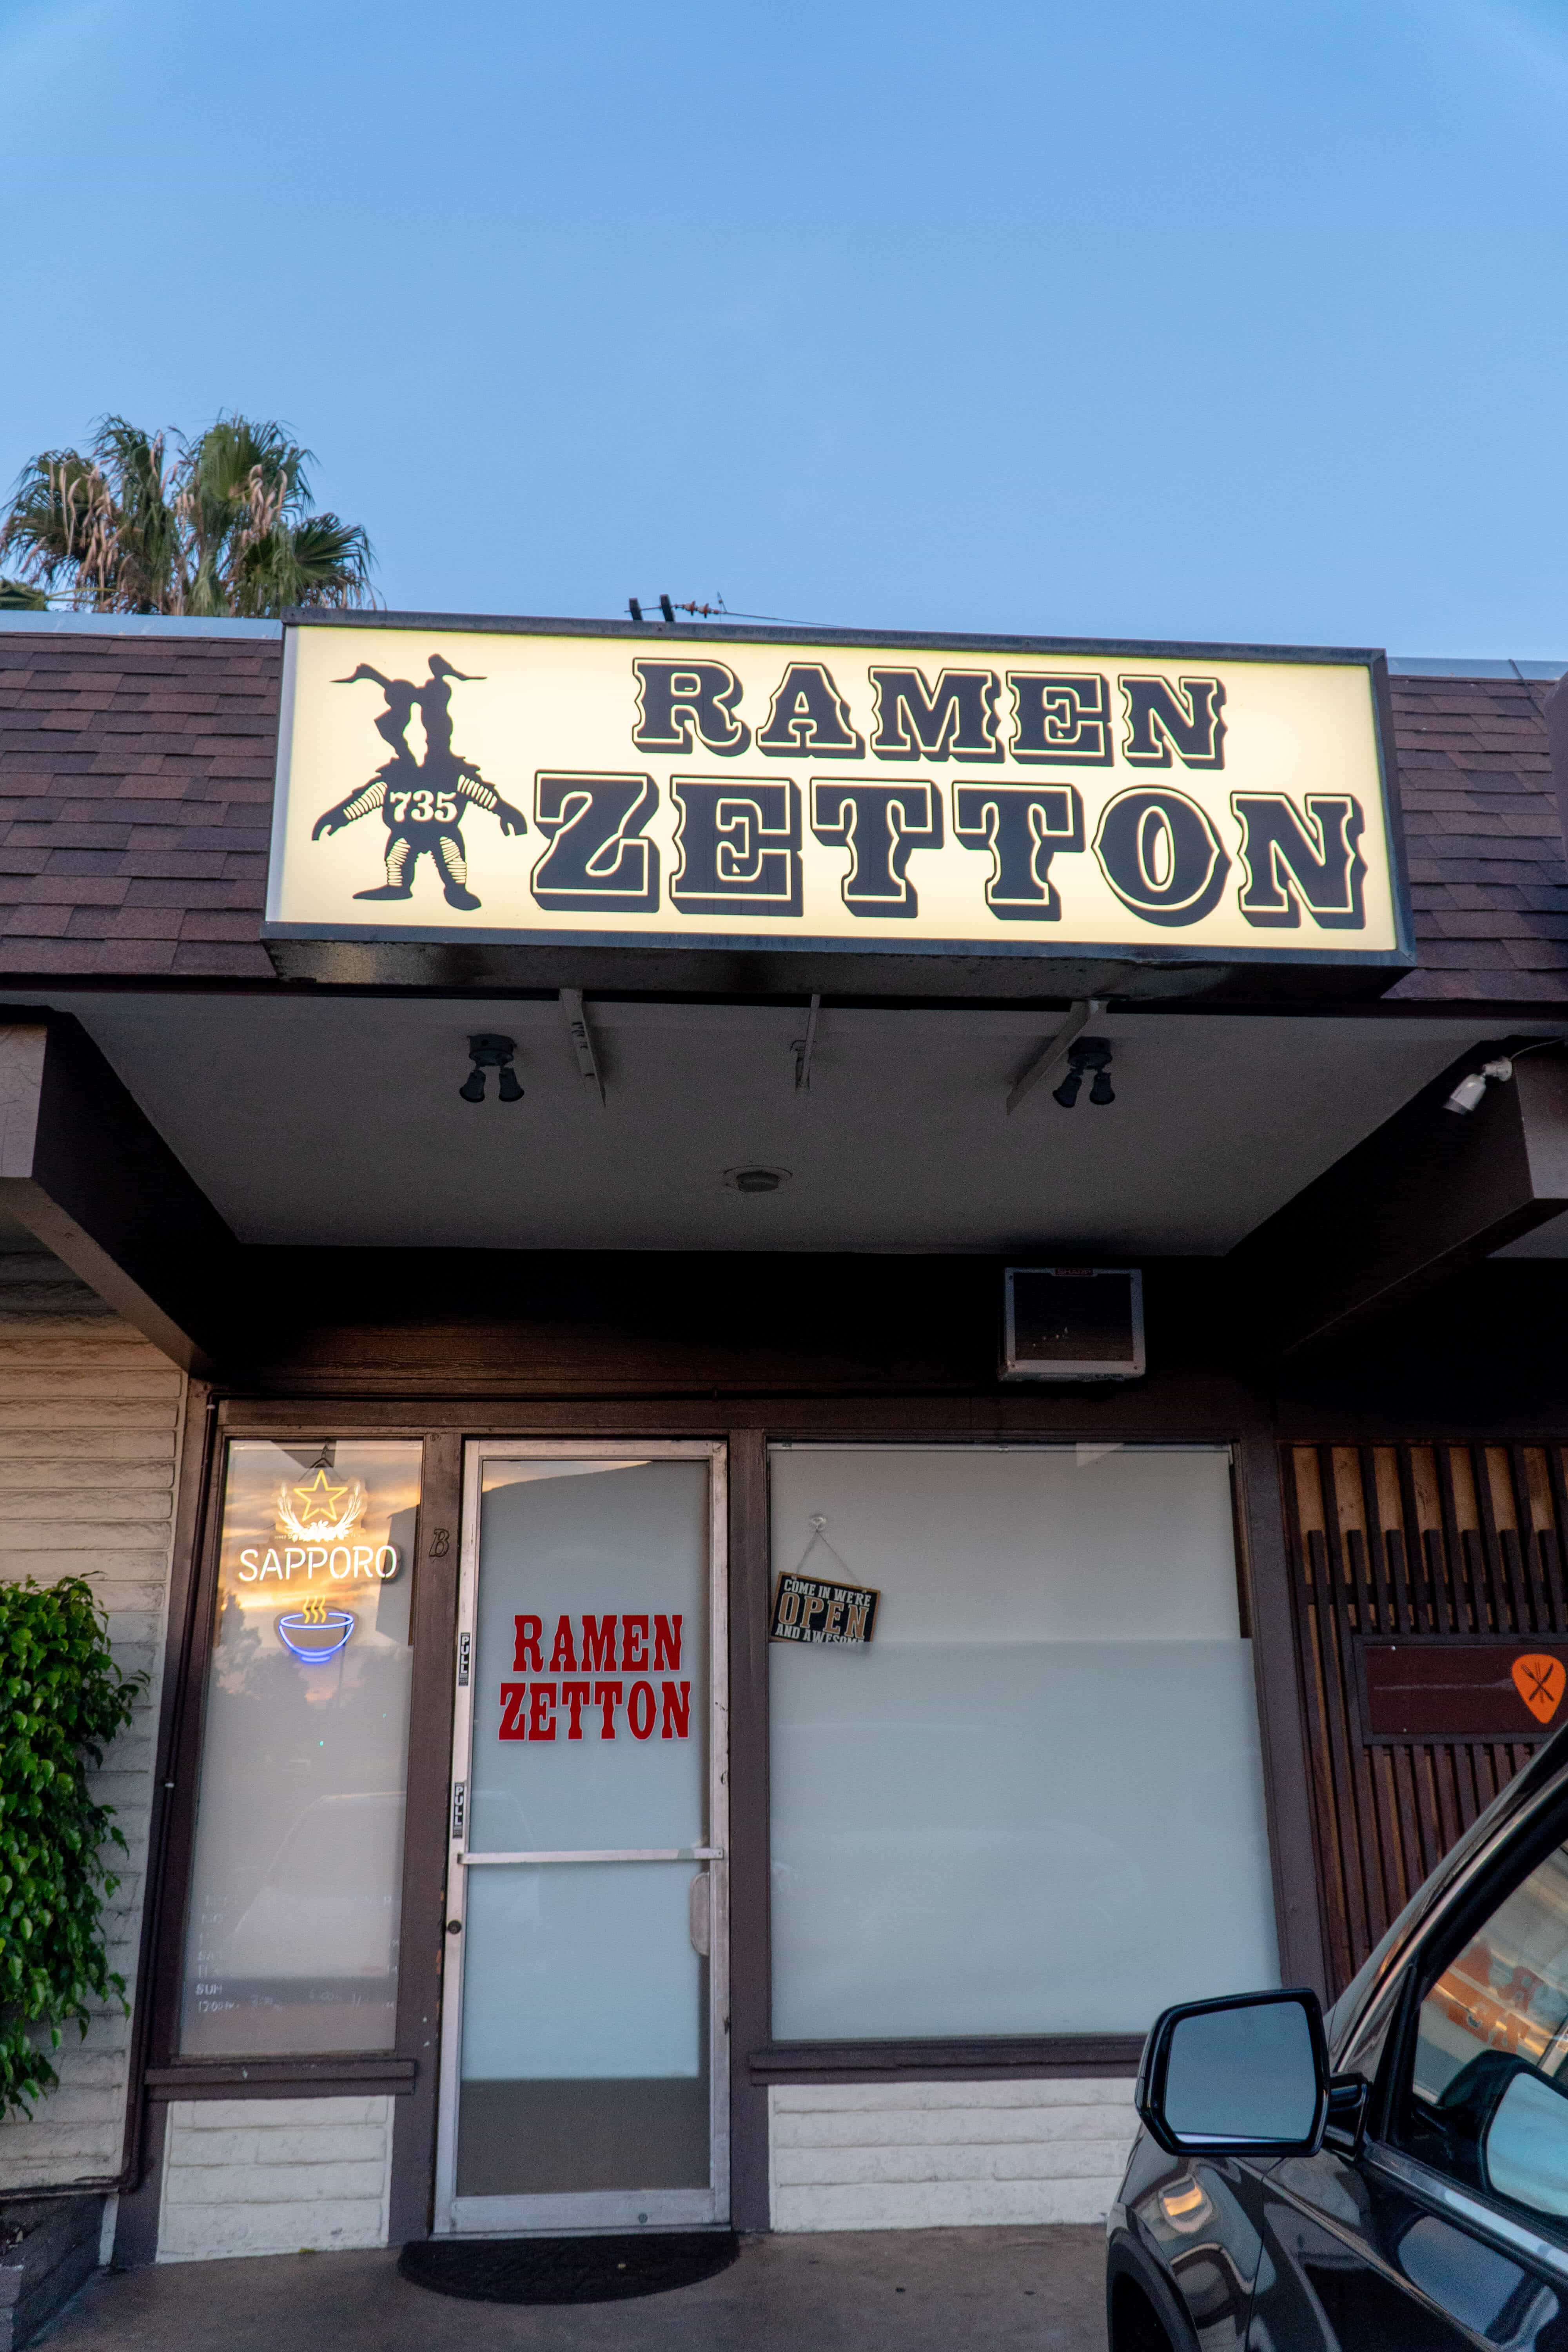 The Ultimate Guide to Ramen in Orange County | Ramen Zetton Exterior | The Republic of Rose | #Ramen #Japanese #Food #OrangeCounty #California #Dining #Noodles